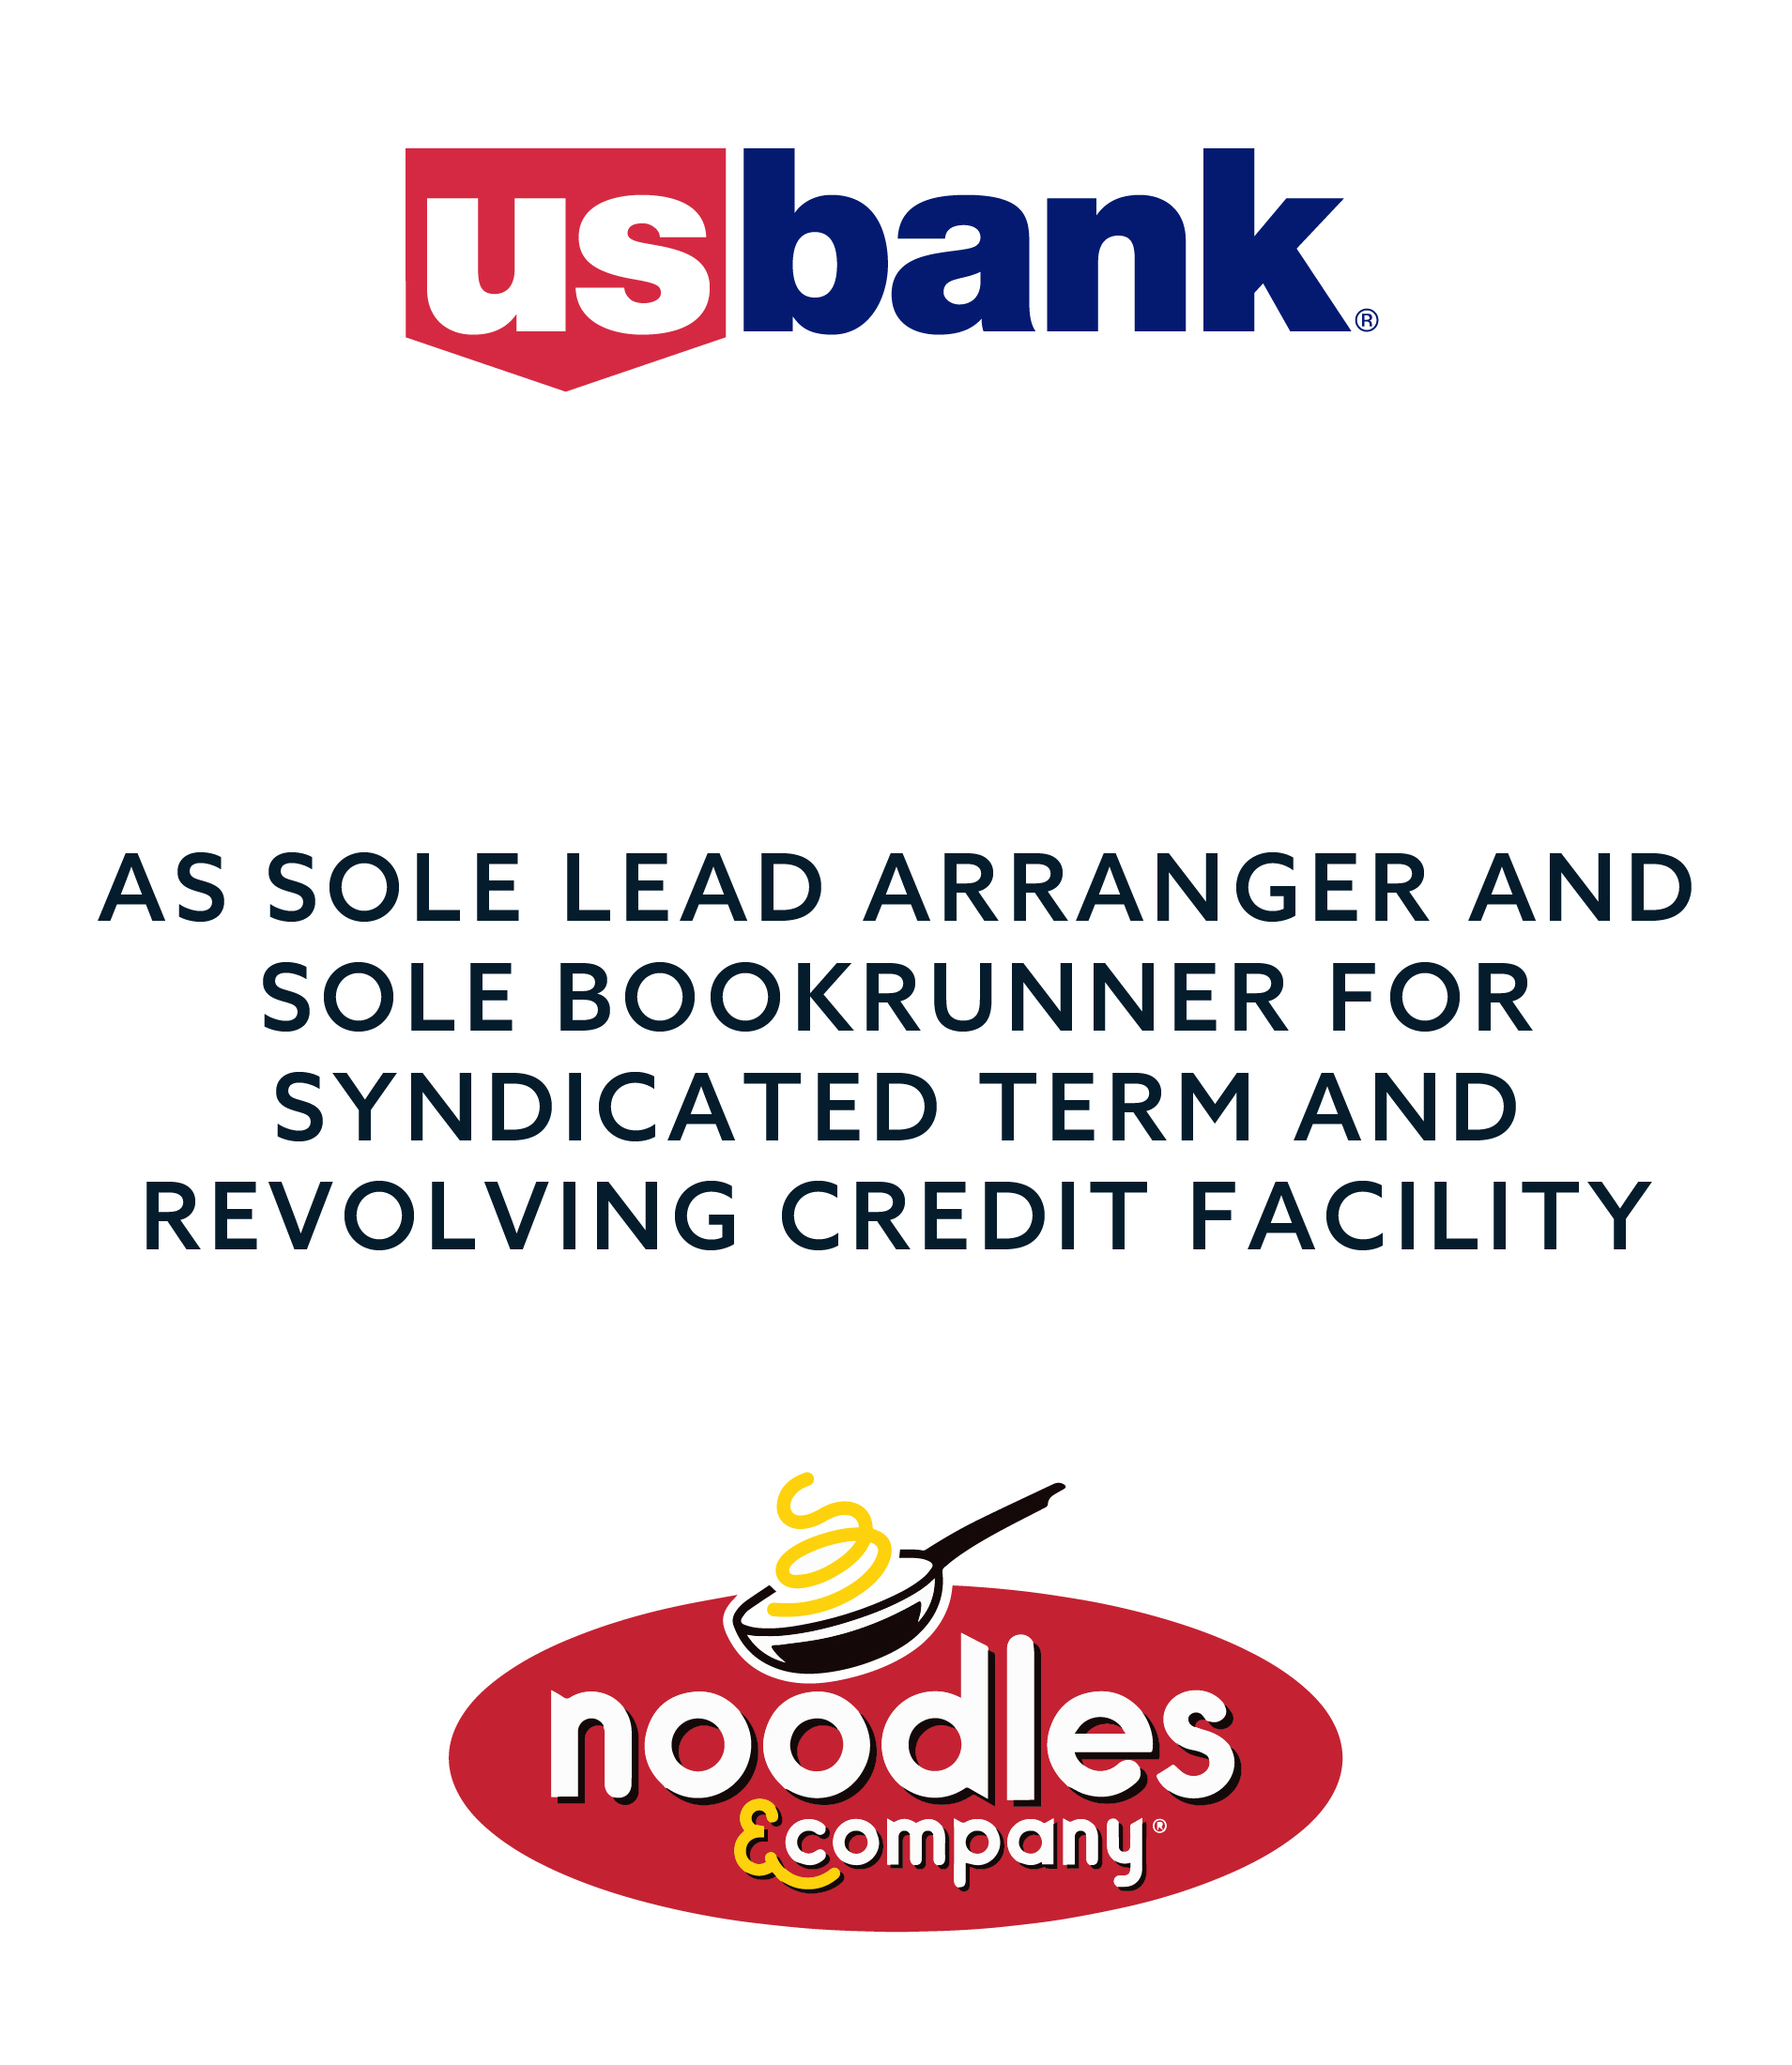 U.S. Bank_Noodles_004724.0247